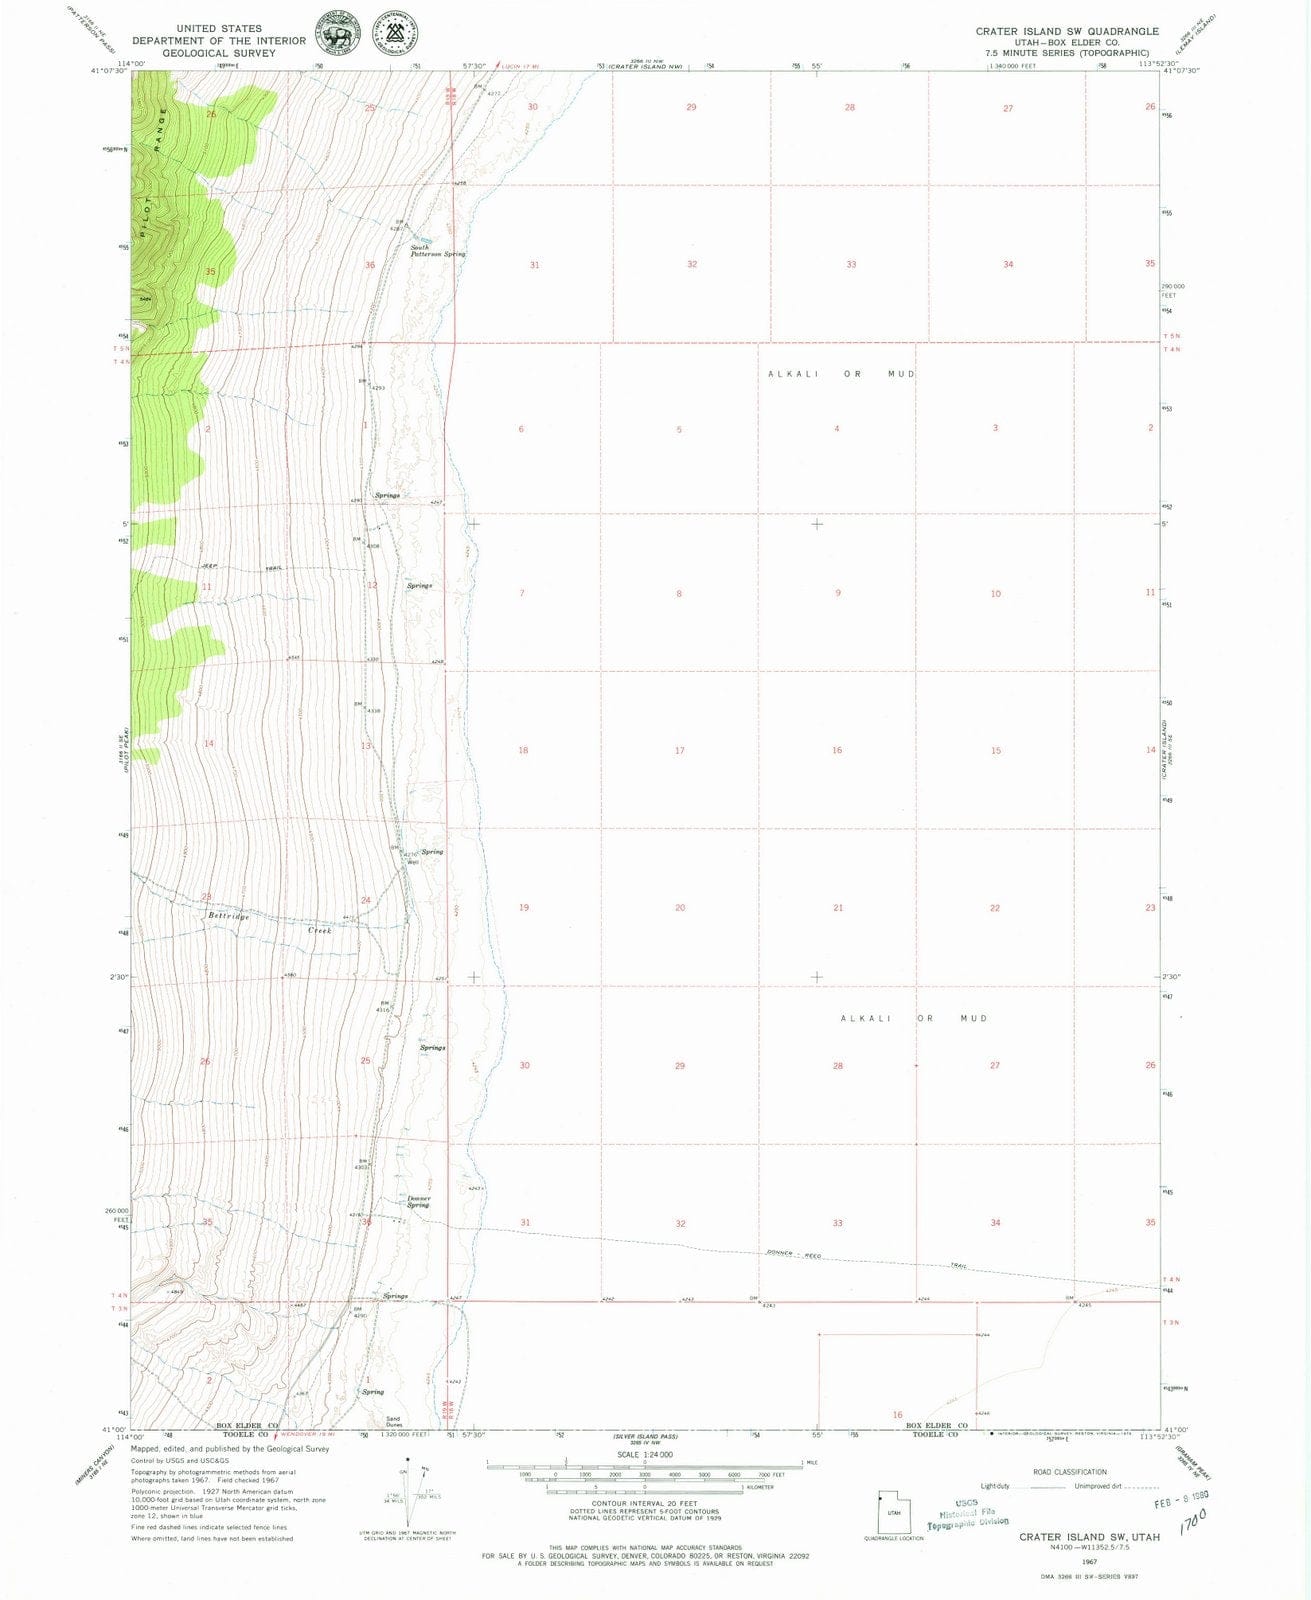 1967 Crater Island, UT - Utah - USGS Topographic Map v2